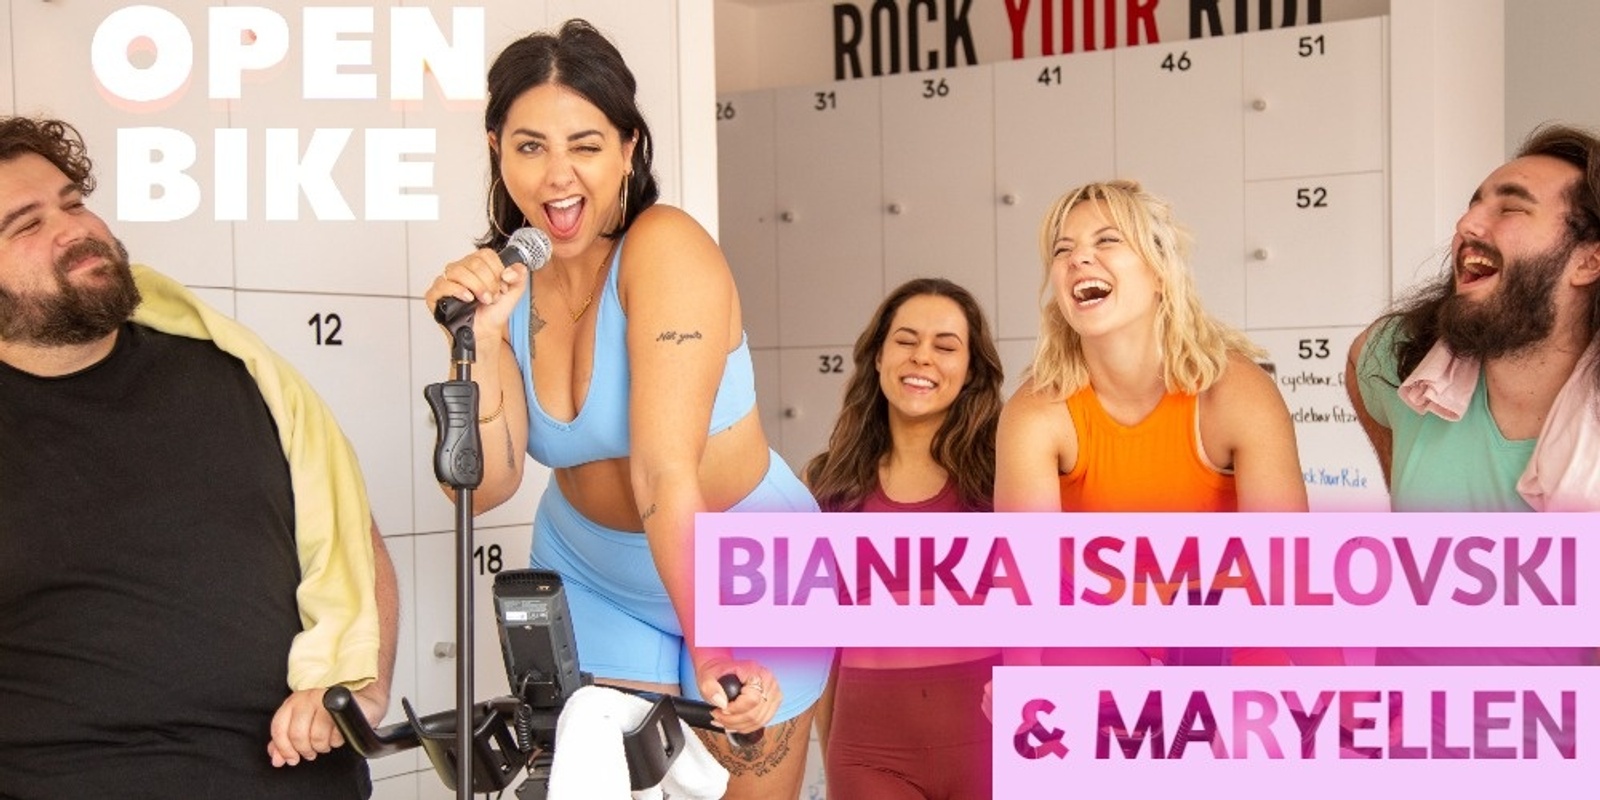 Banner image for Bianka Ismailovski & Maryellen: 'Open Bike' at Melbourne International Comedy Festival